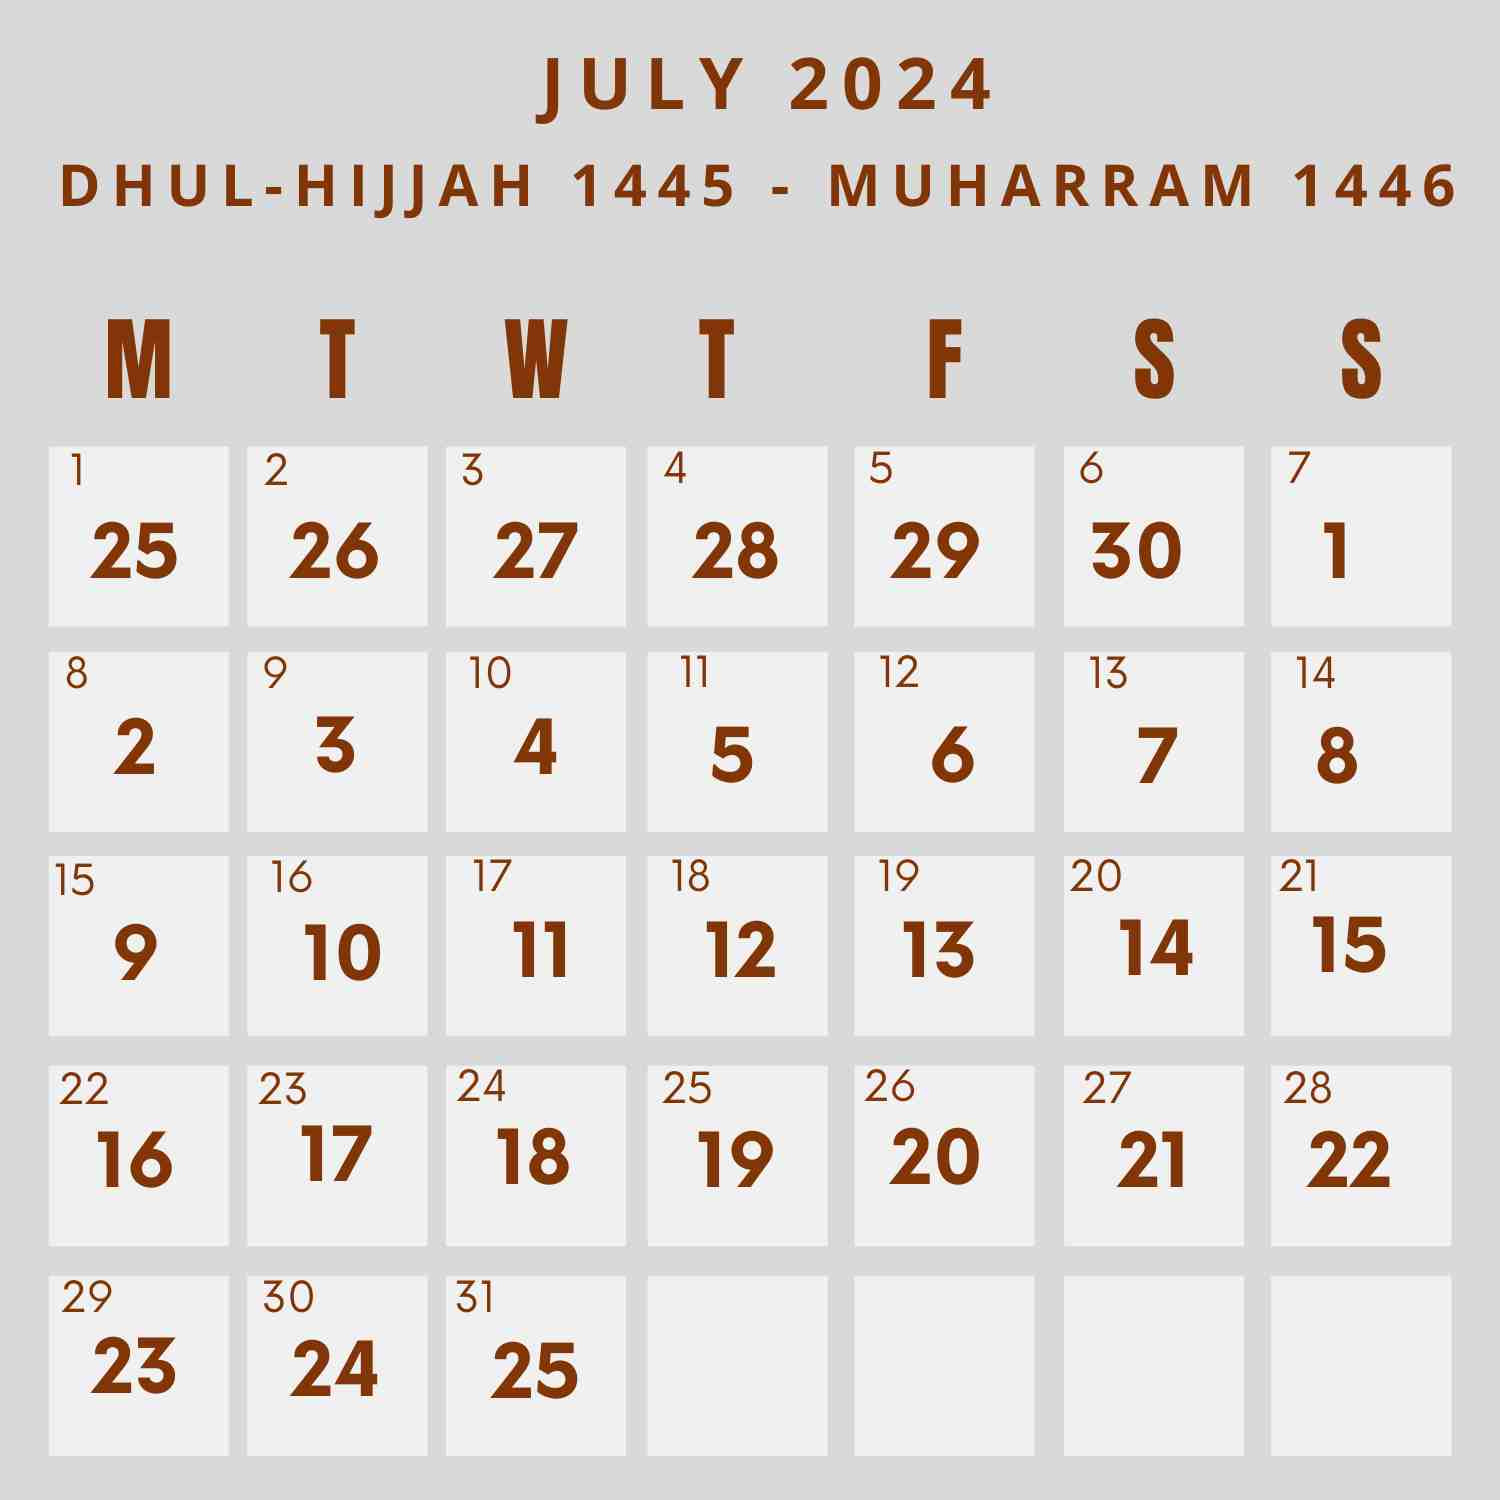 Islamic Calendar 2024 - Khwajadarbar regarding 14 July 2024 in Islamic Calendar